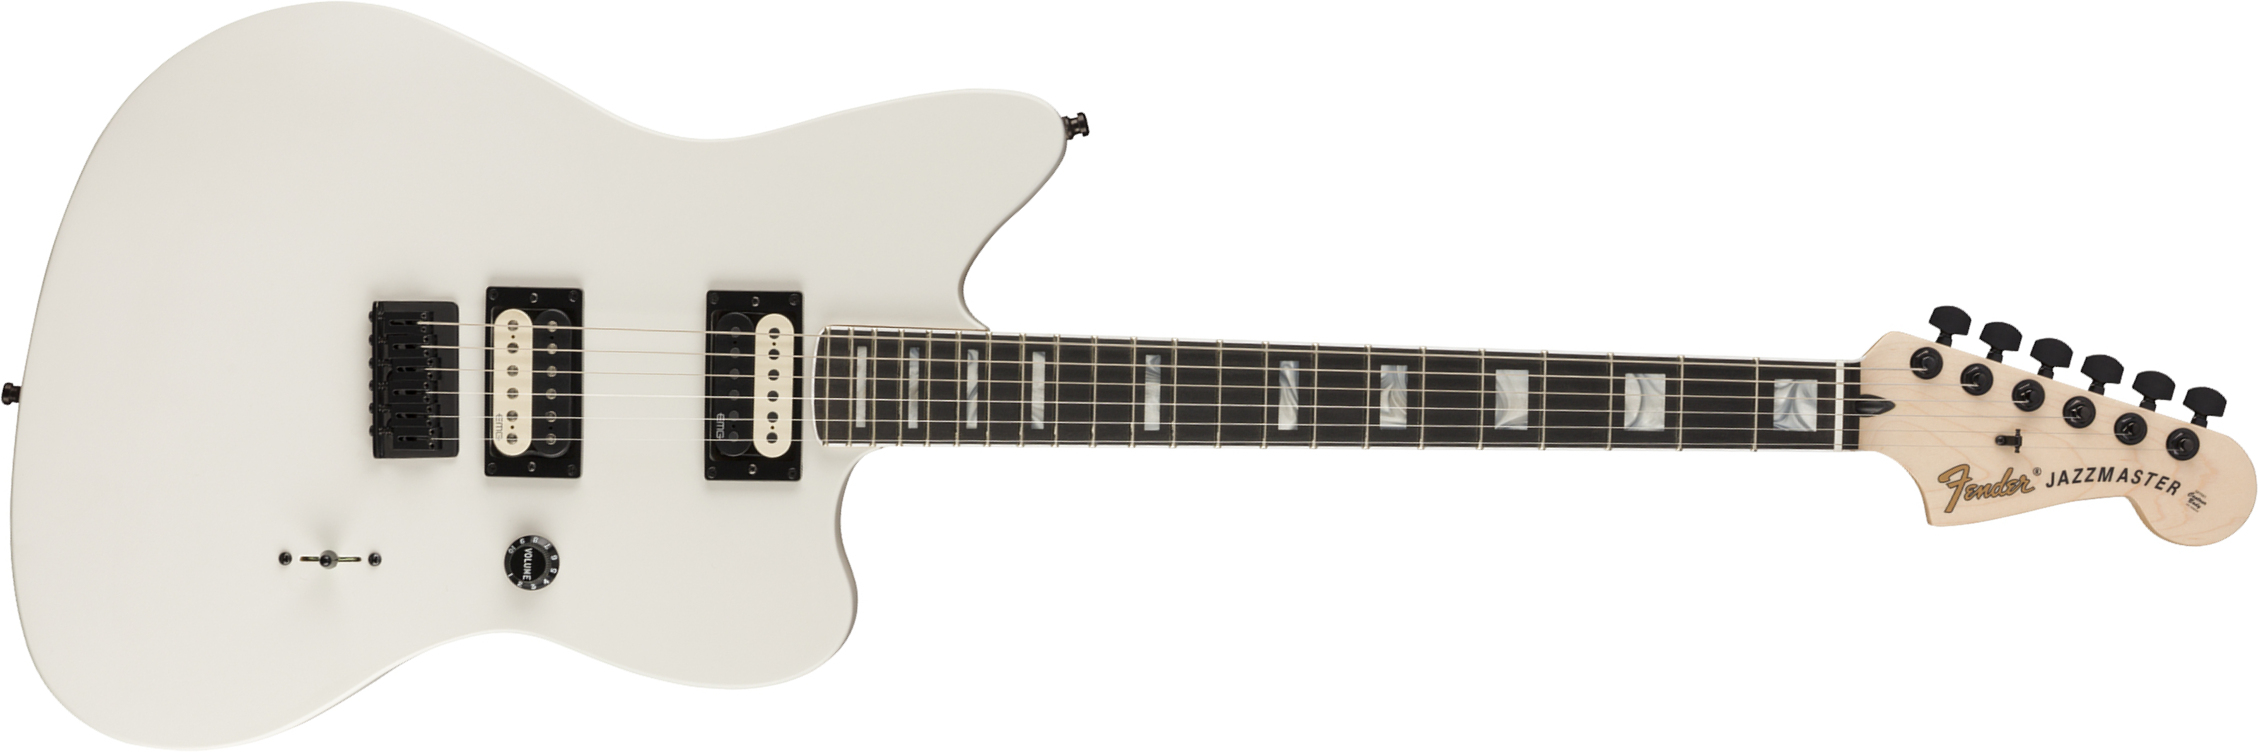 Fender Jim Root Jazzmaster V4 Mex Signature Hh Emg Ht Eb - Artic White - Guitarra electrica retro rock - Main picture